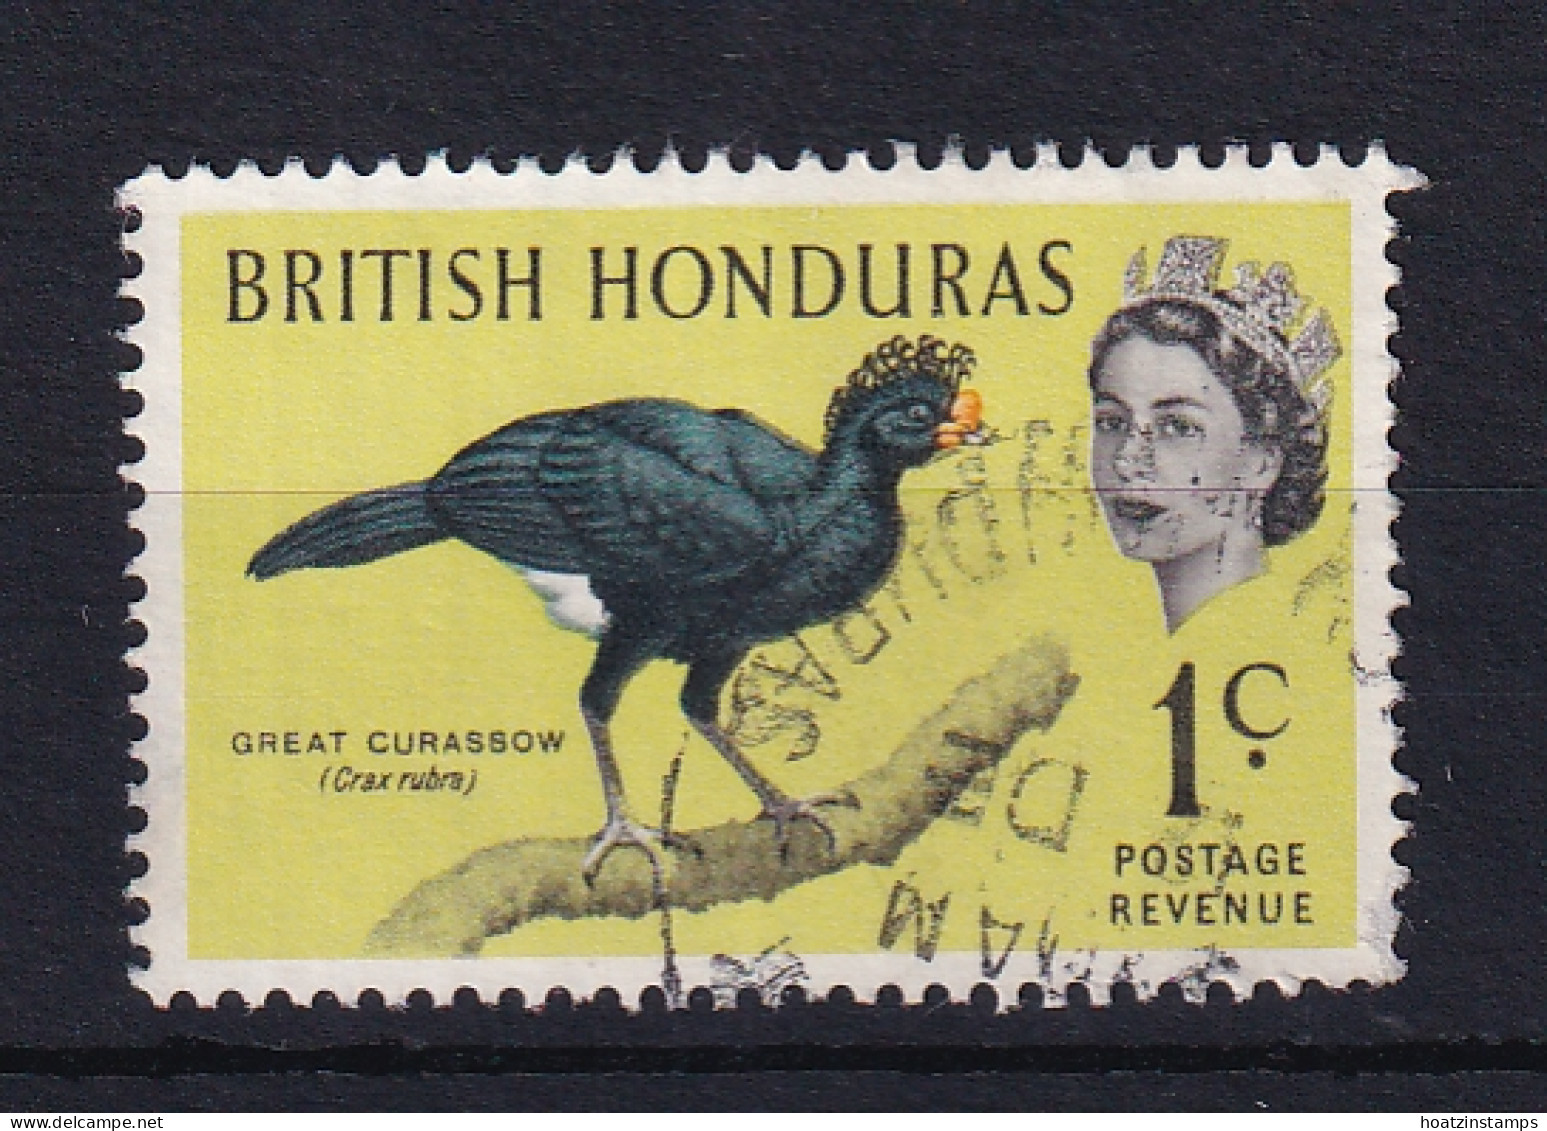 British Honduras: 1962   QE II - Birds   SG202    1c    Used - Honduras Britannico (...-1970)